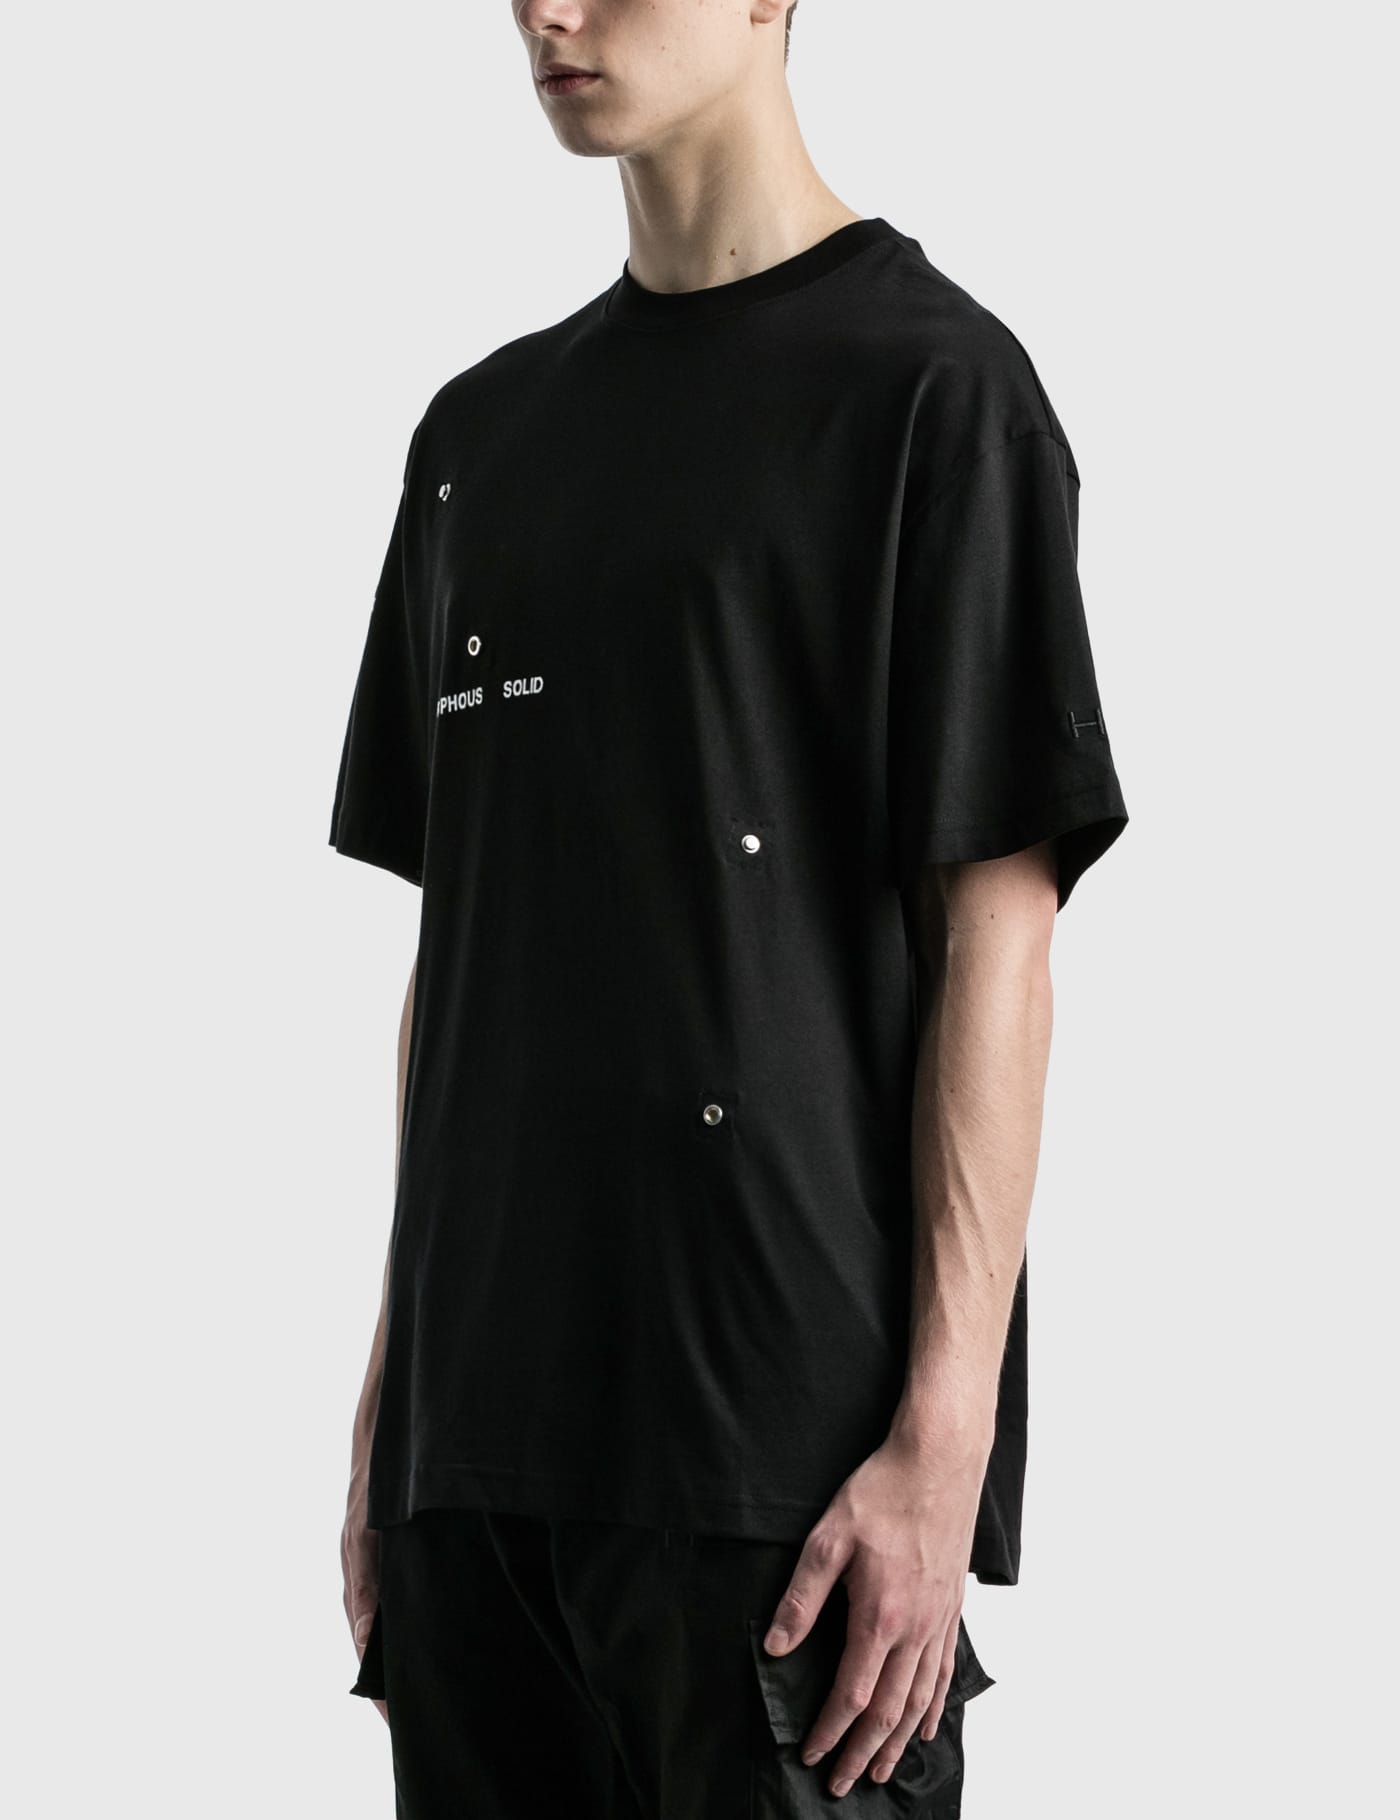 Heliot Emil - Warped T-Shirt | HBX - ハイプビースト(Hypebeast)が 